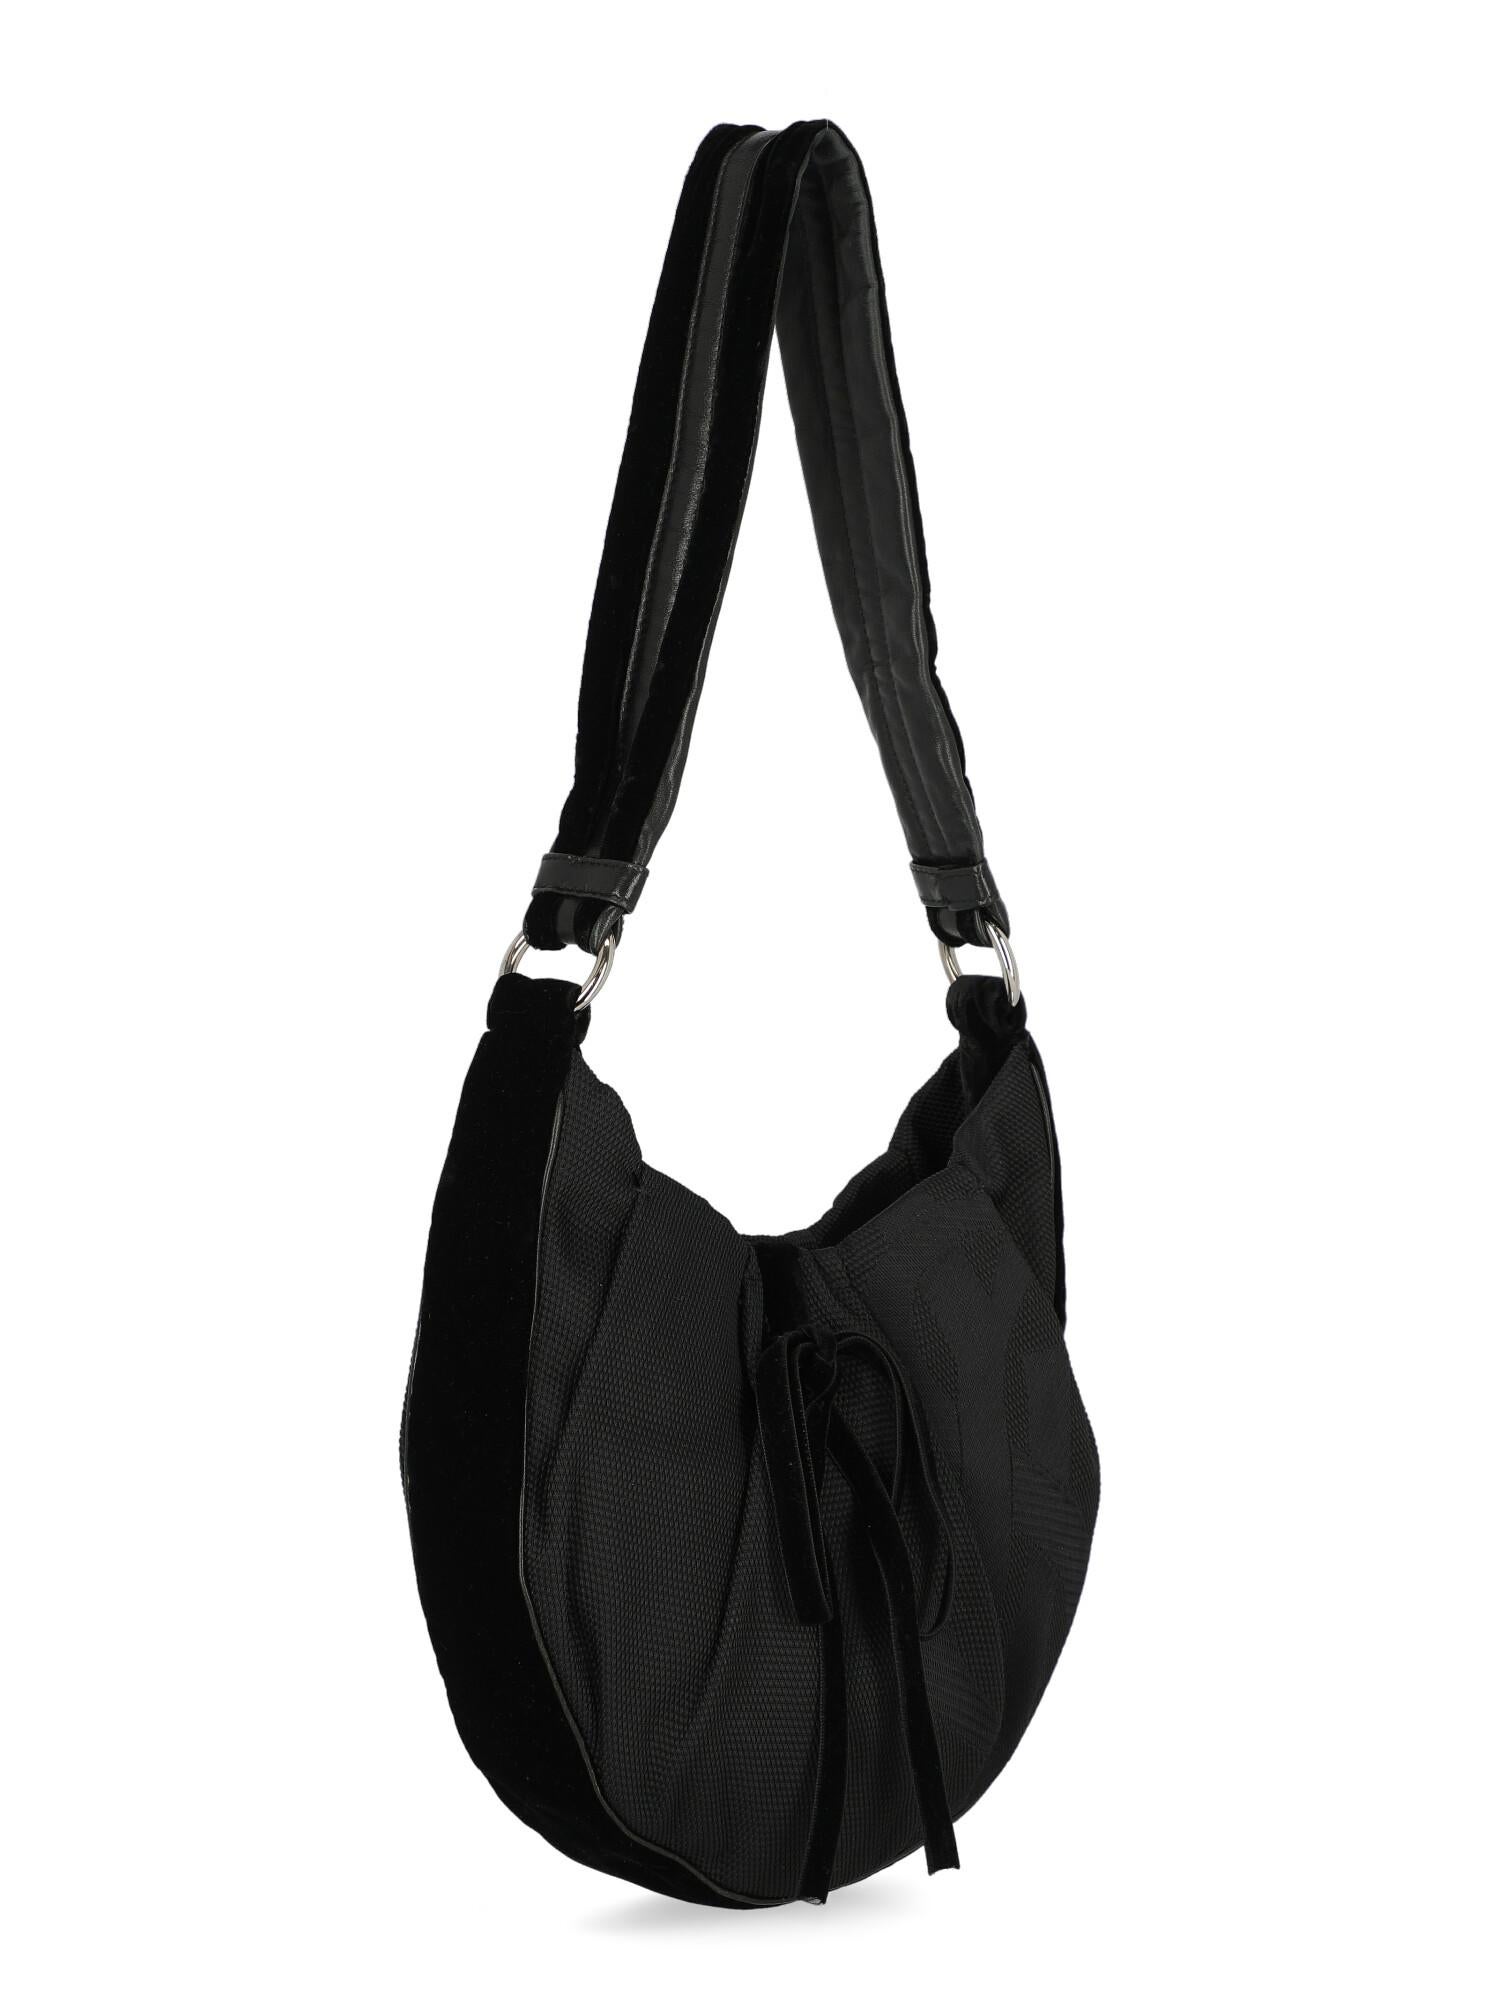 Saint Laurent  Women   Shoulder bags   Black Fabric  In Good Condition For Sale In Milan, IT